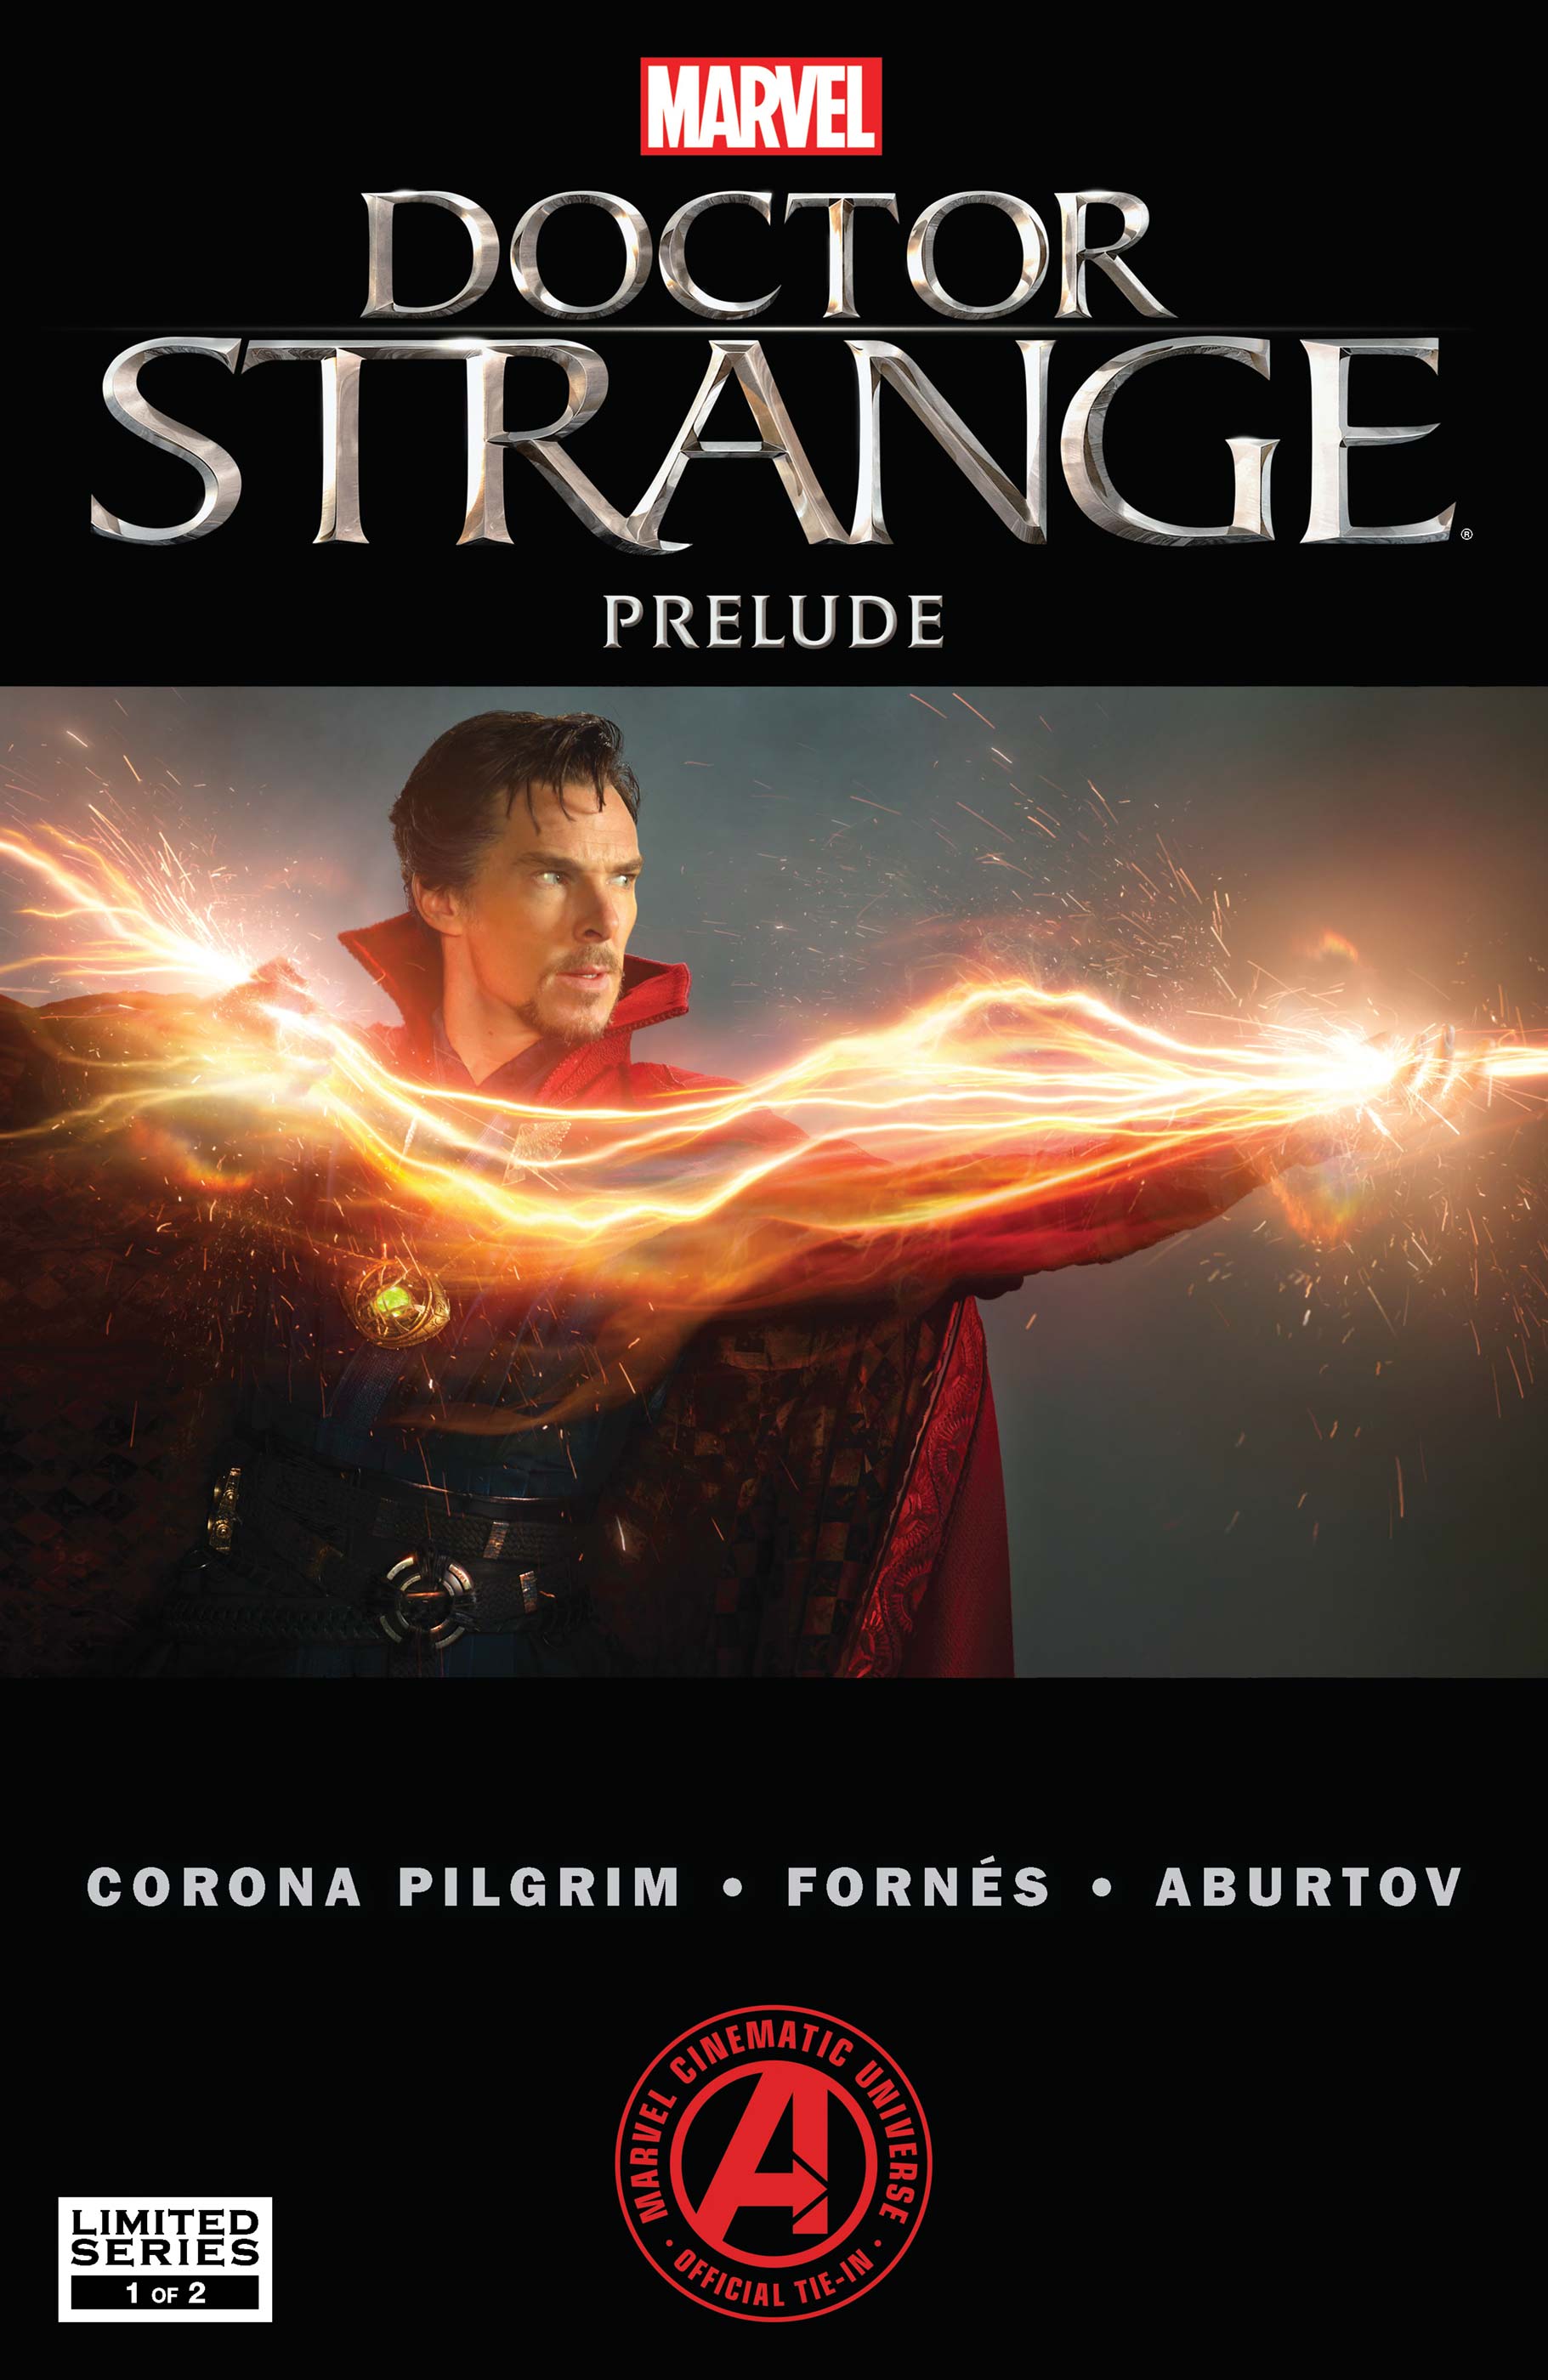 Marvel's Doctor Strange Prelude (2016) #1